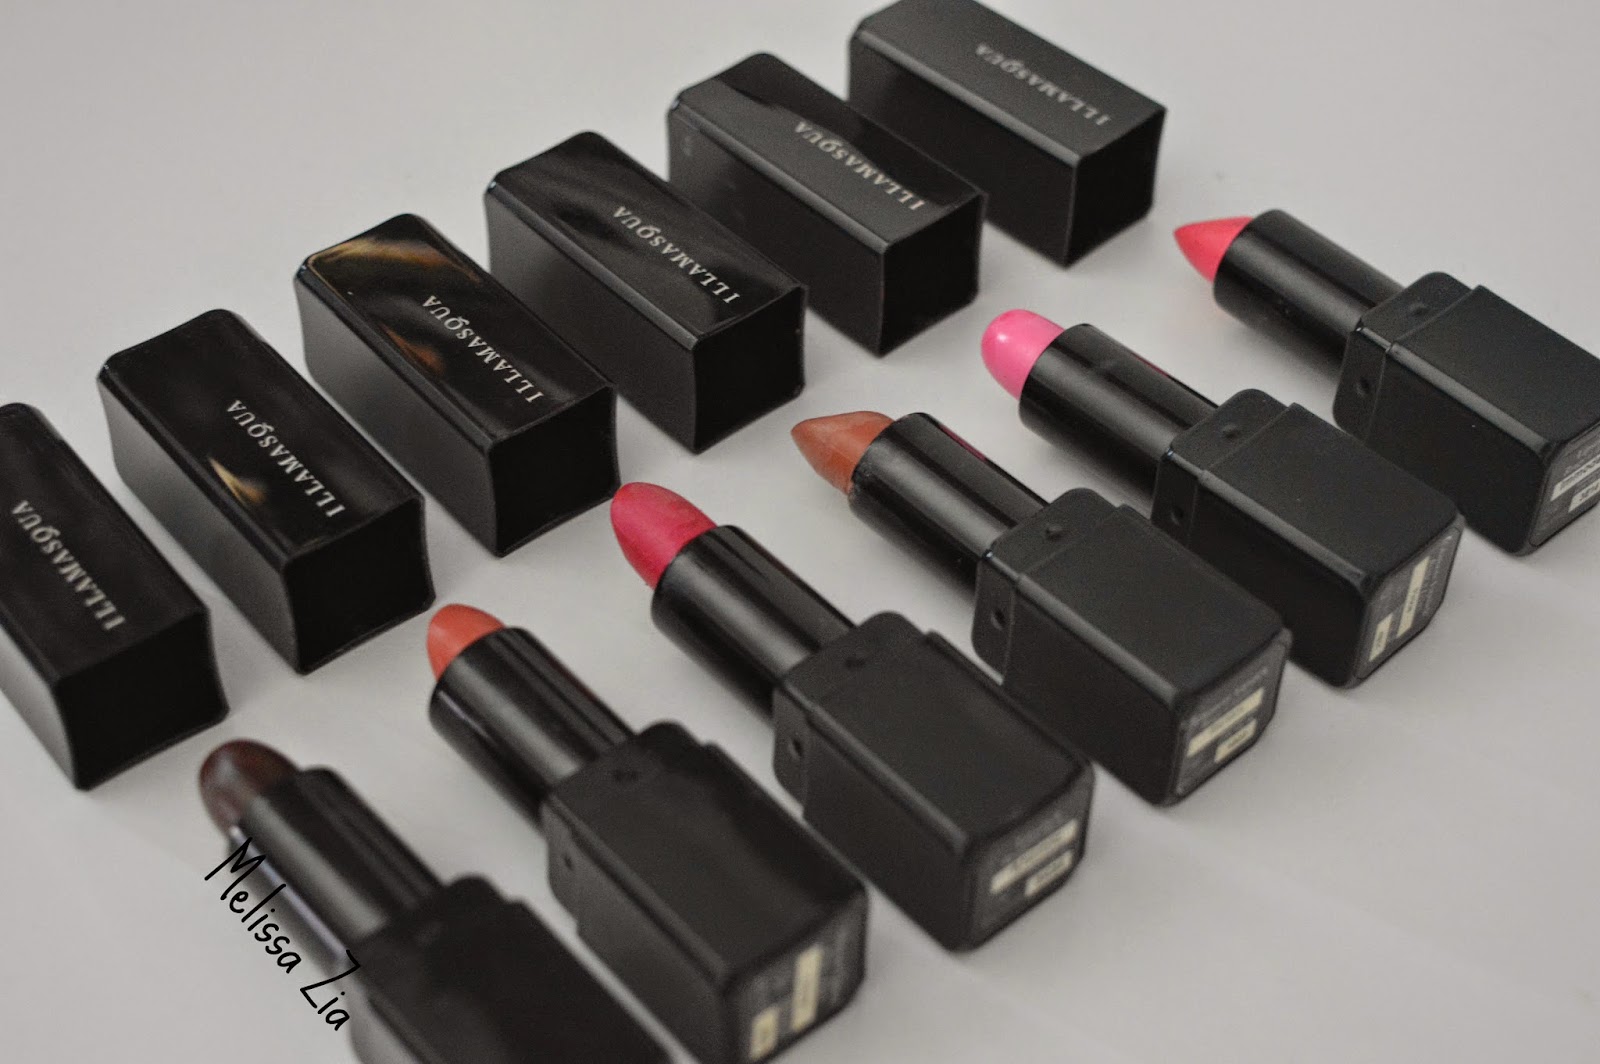 illamasqua lipsticks